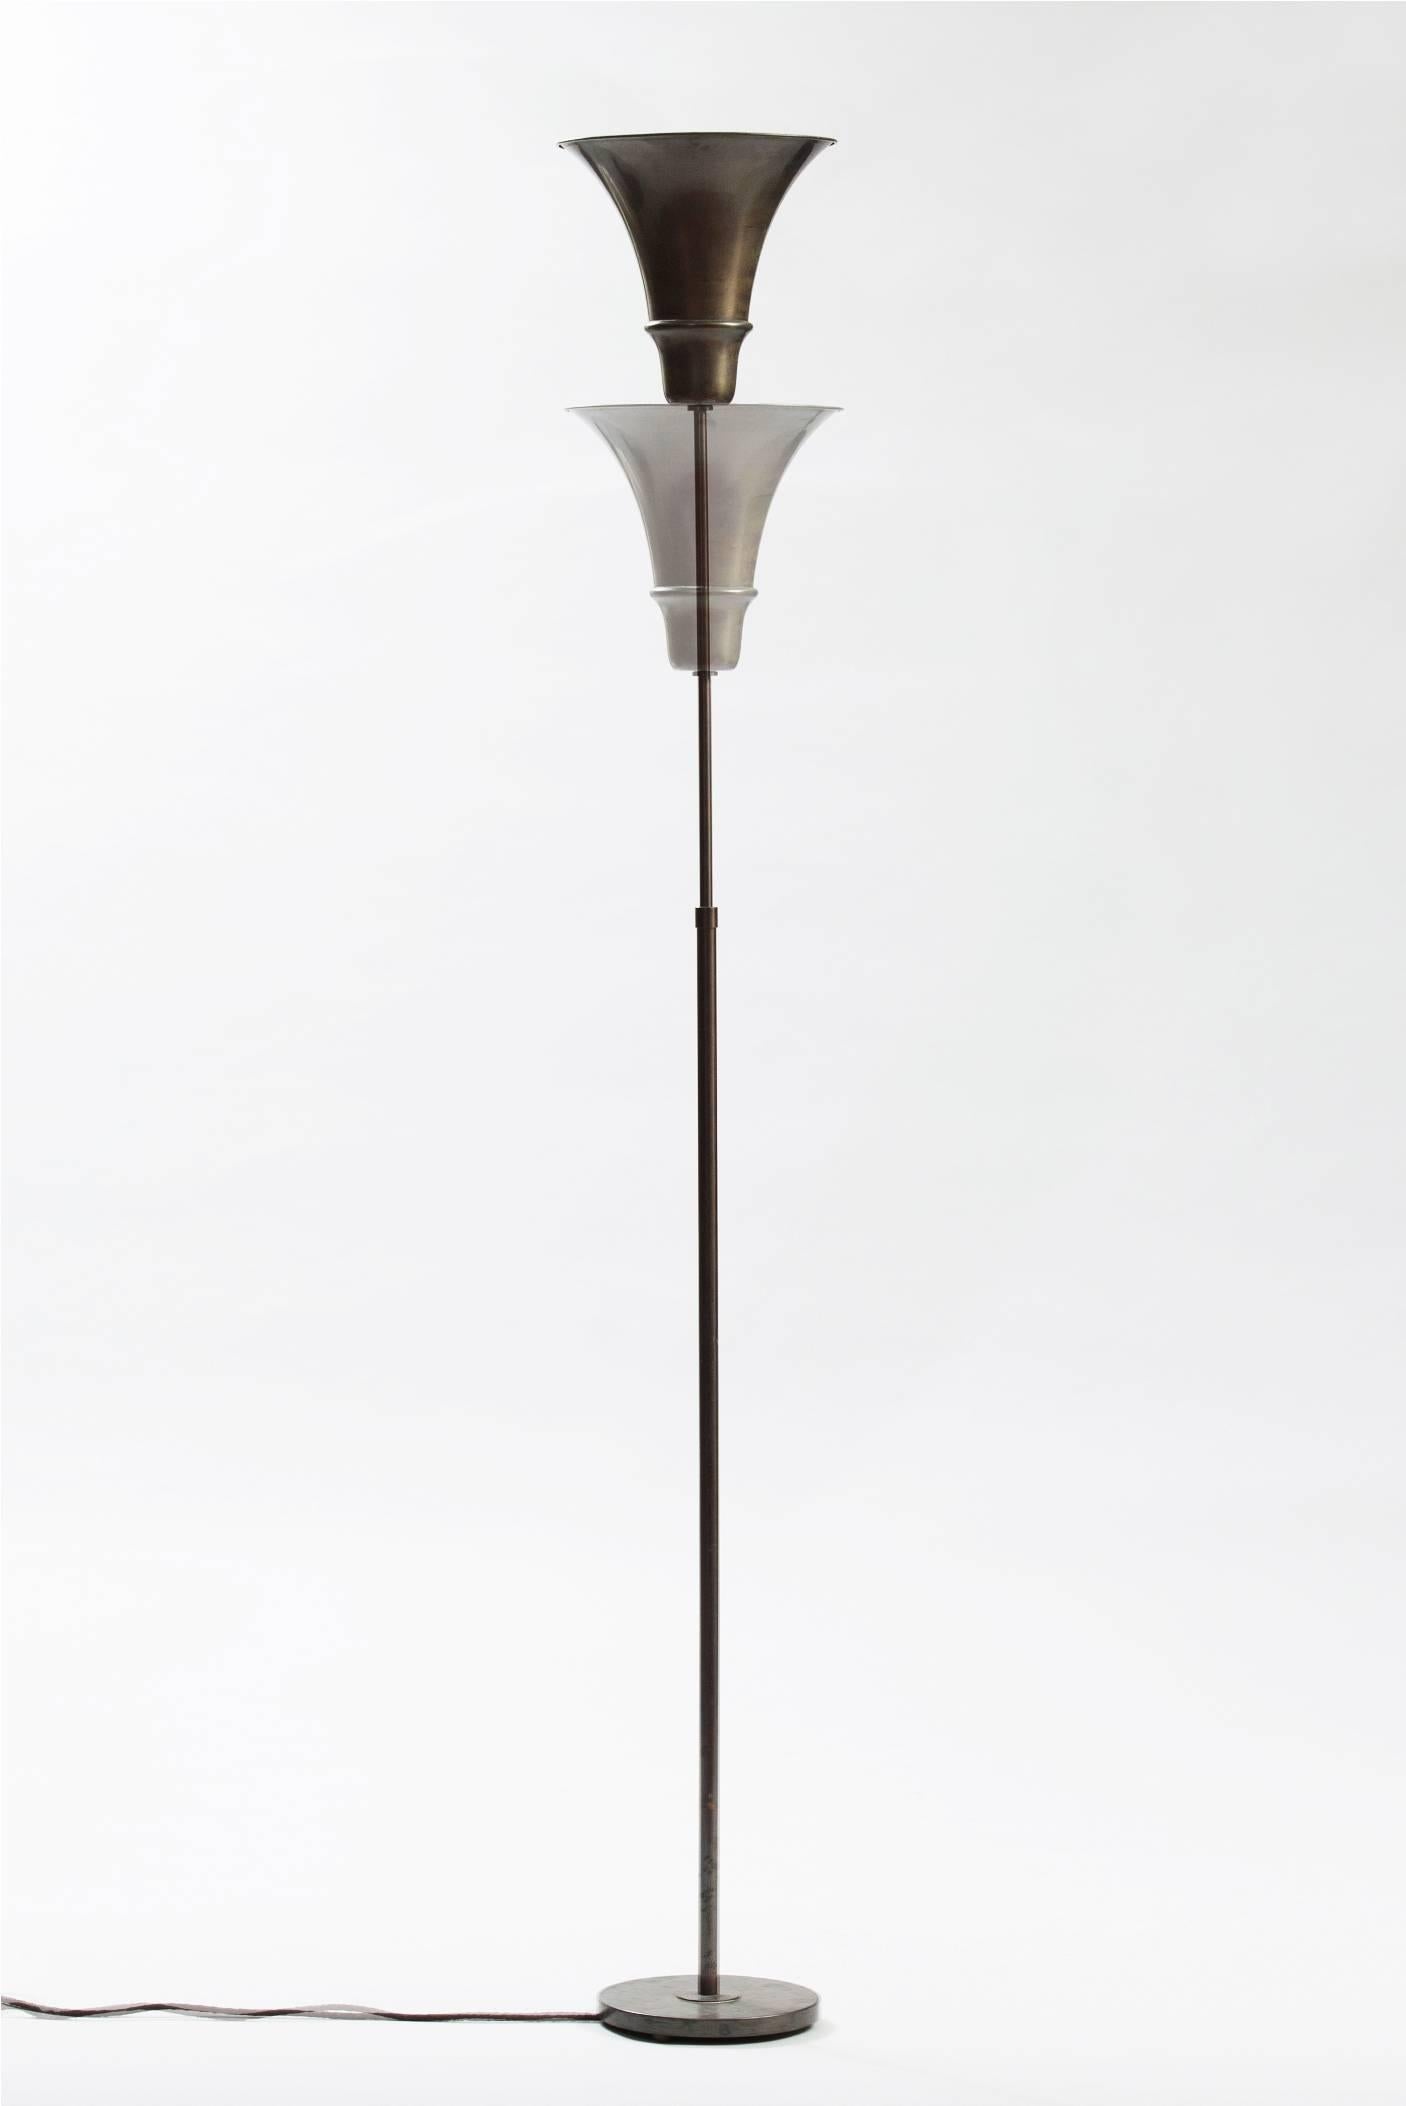 Art Deco Modernist or Industrial Floor Lamp